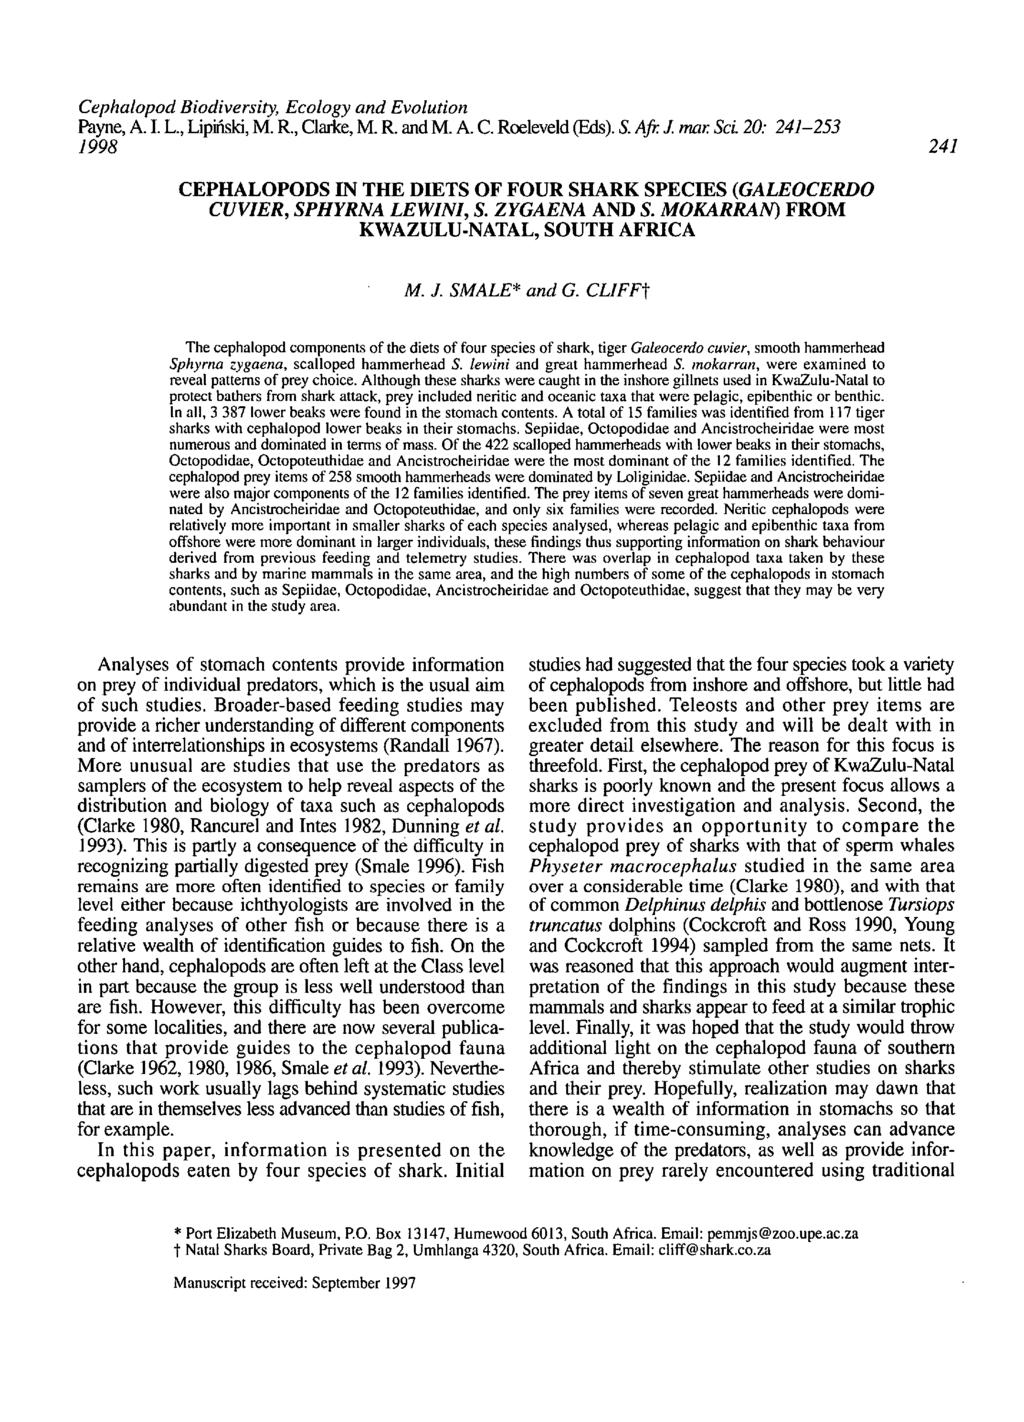 Cephalopod Biodiversity, Ecology and Evolution Payne, A. I. L., Lipffiski,M. R., Clarke, M. R. and M. A. C. Roeleveld (Eds). S.Afr.l mar.sci.